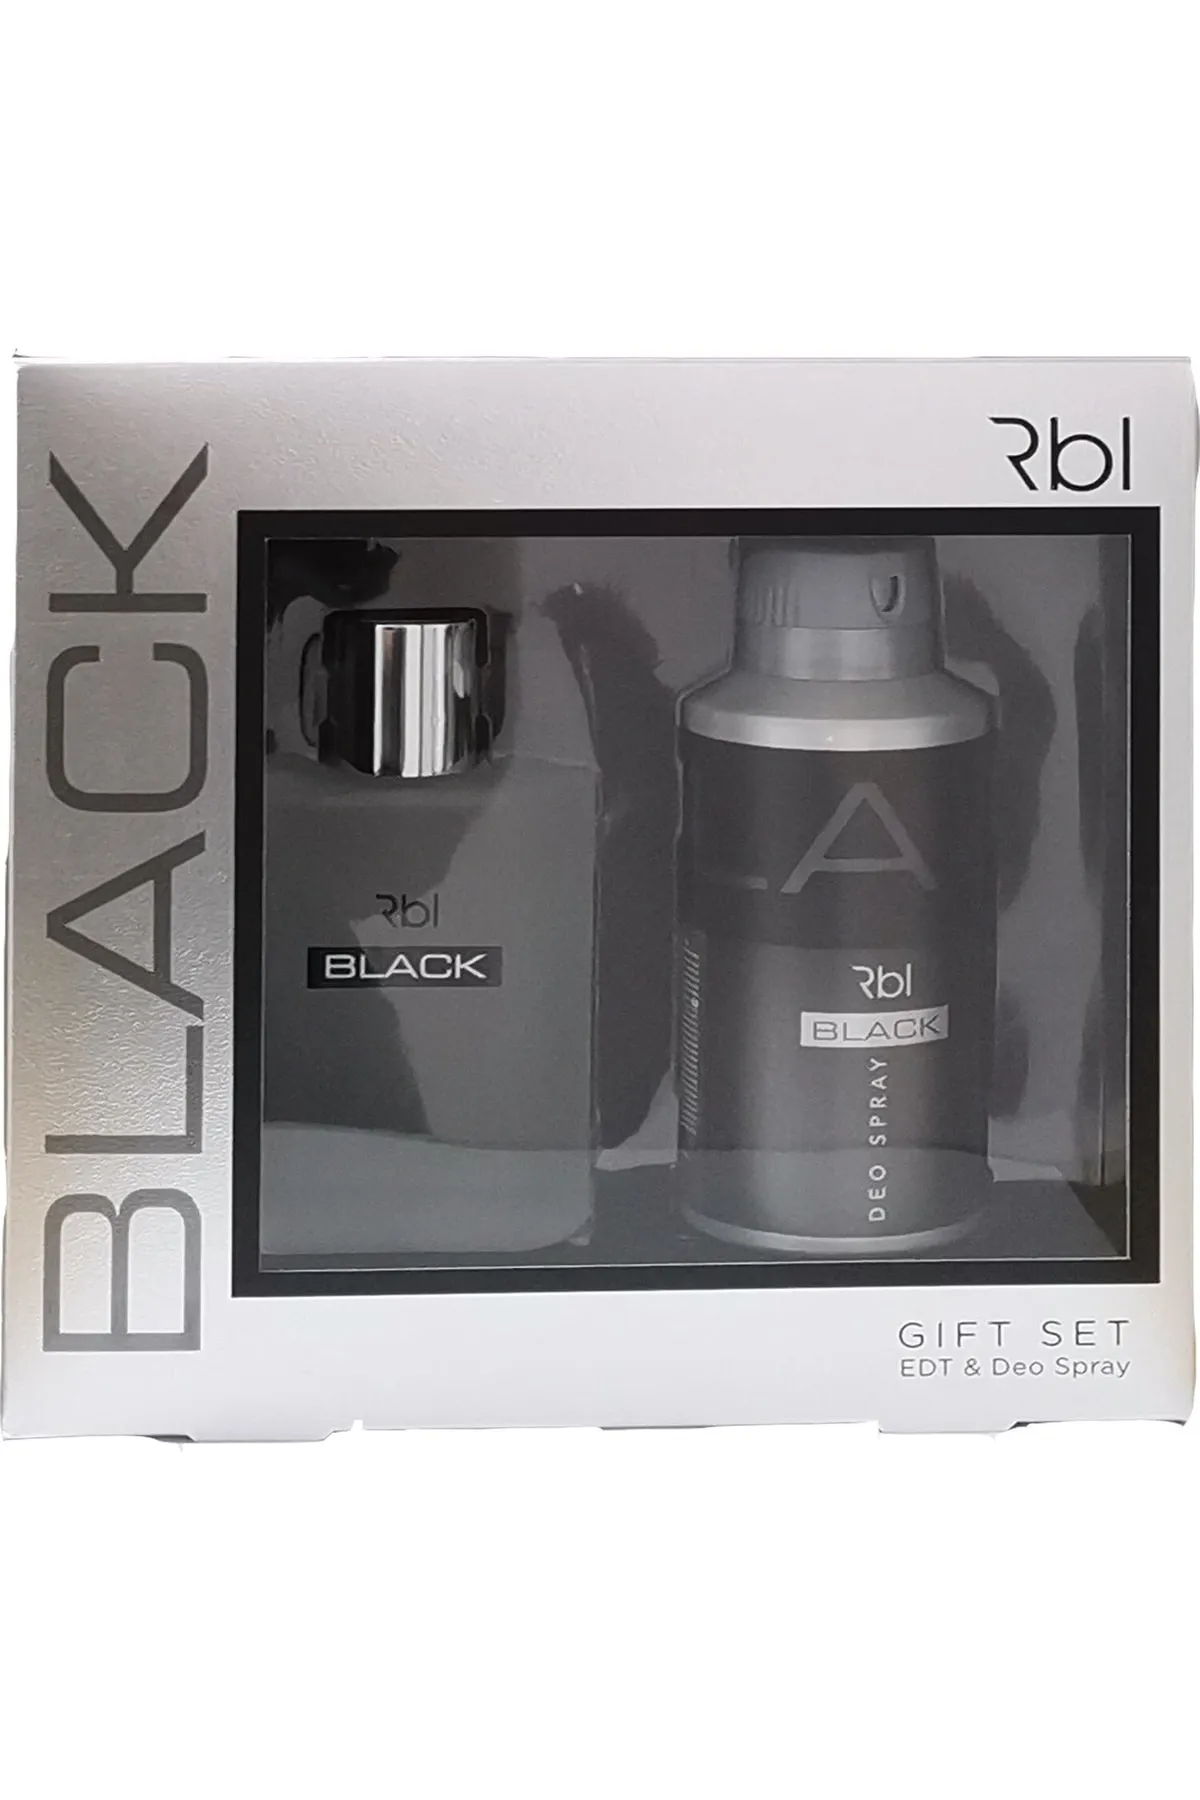 Rebul - Rebul Black Edt 90 ml + 150 ml Deodorant Set